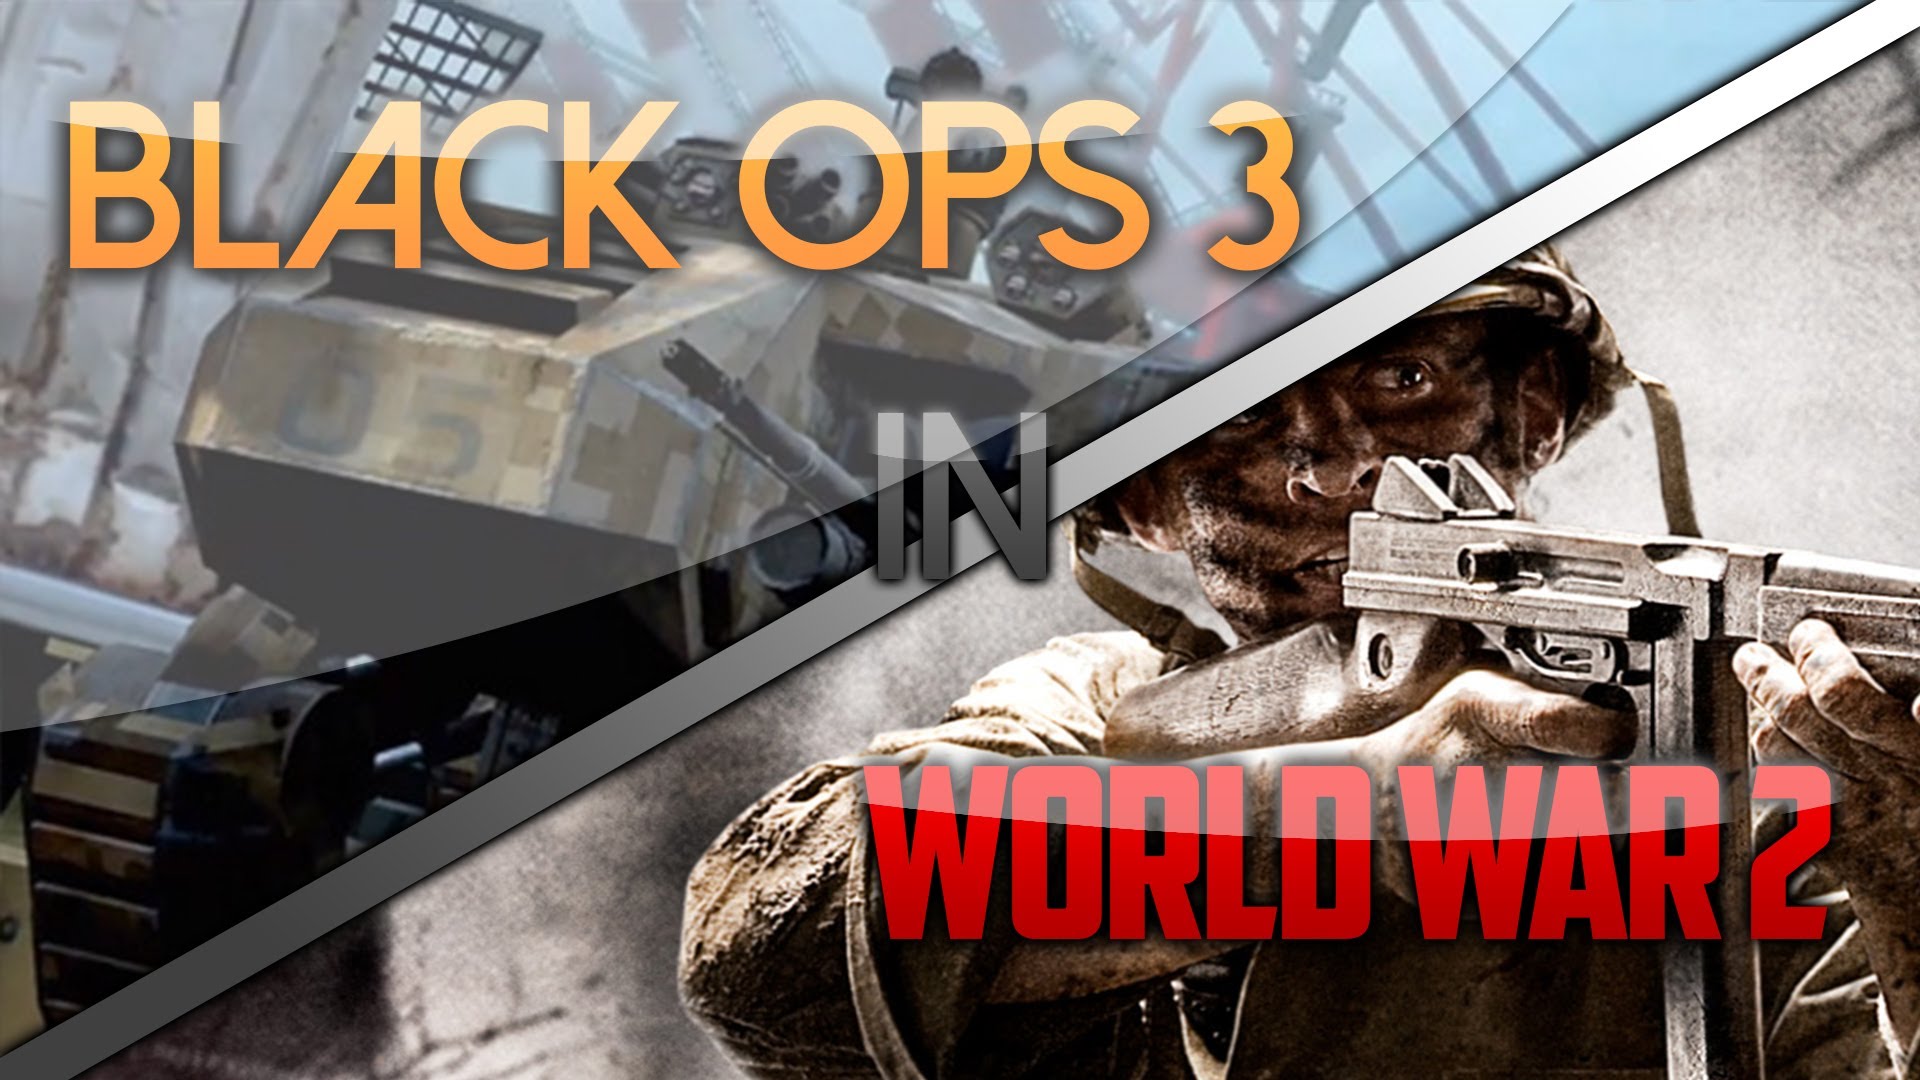 Black Ops 3 In World War 2!